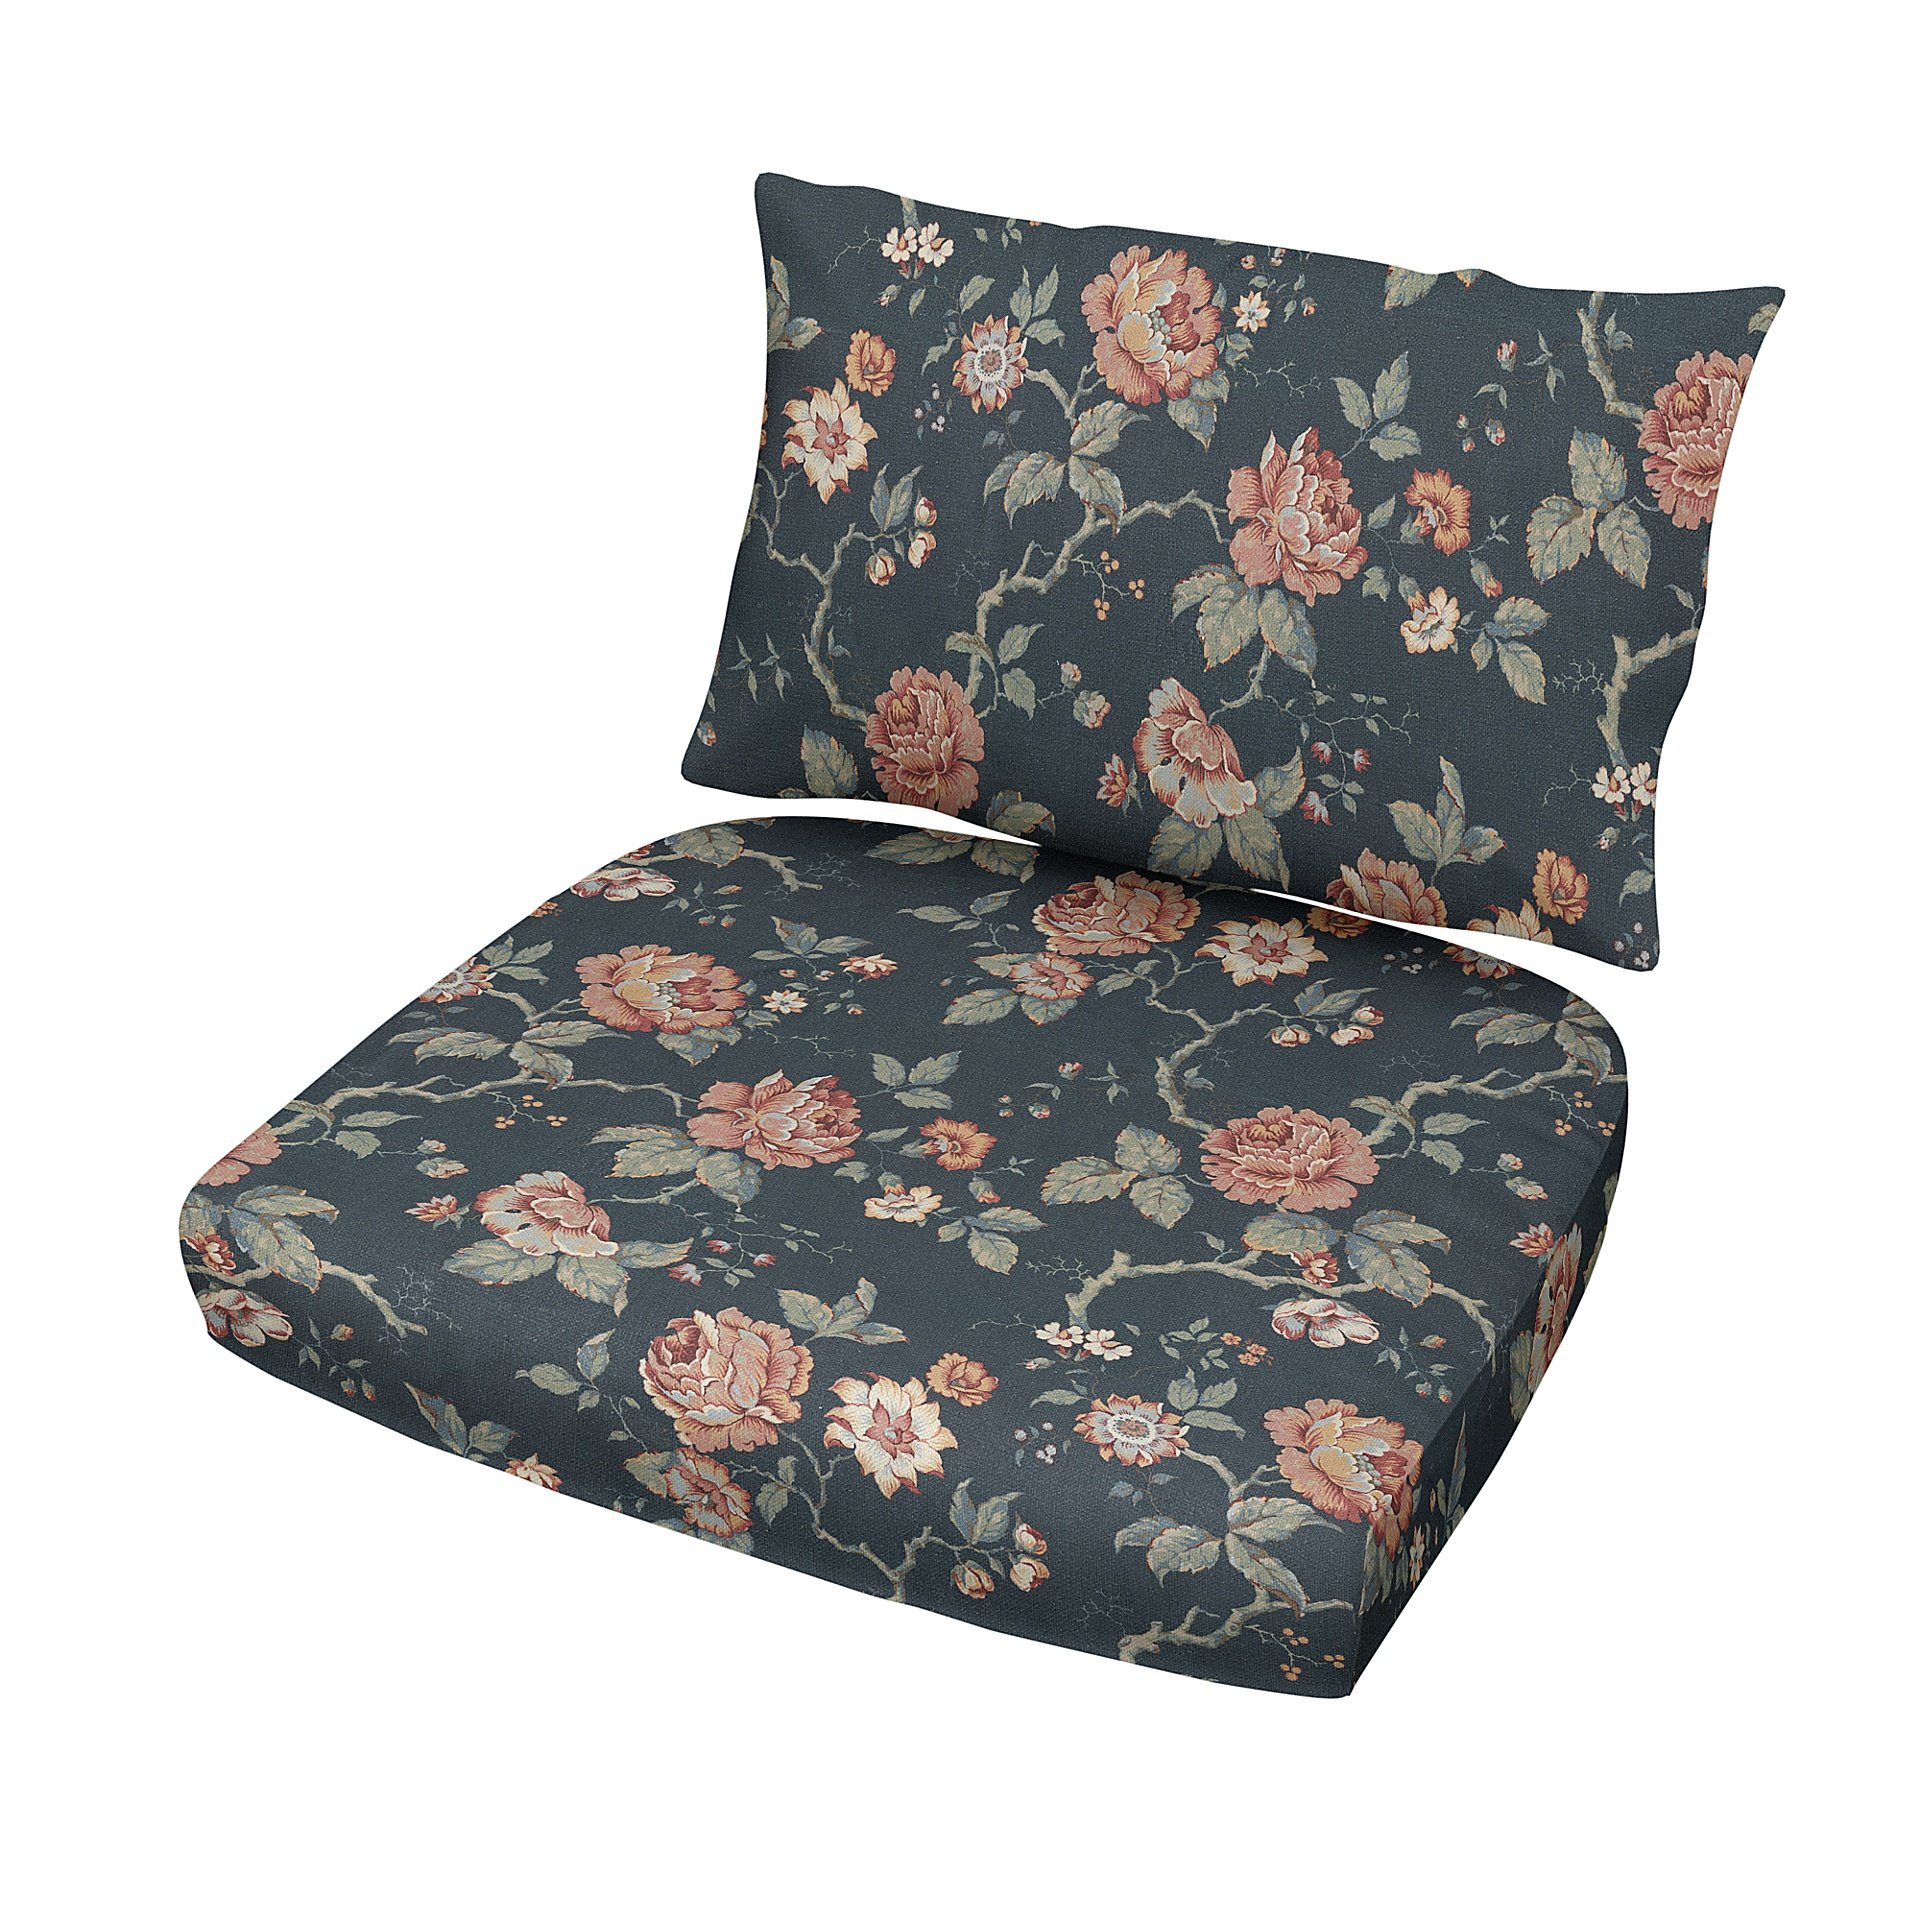 IKEA - Stockholm Rattan Chair Cushion Cover Set, Rosentrad Dark, BEMZ x BORASTAPETER COLLECTION - Be